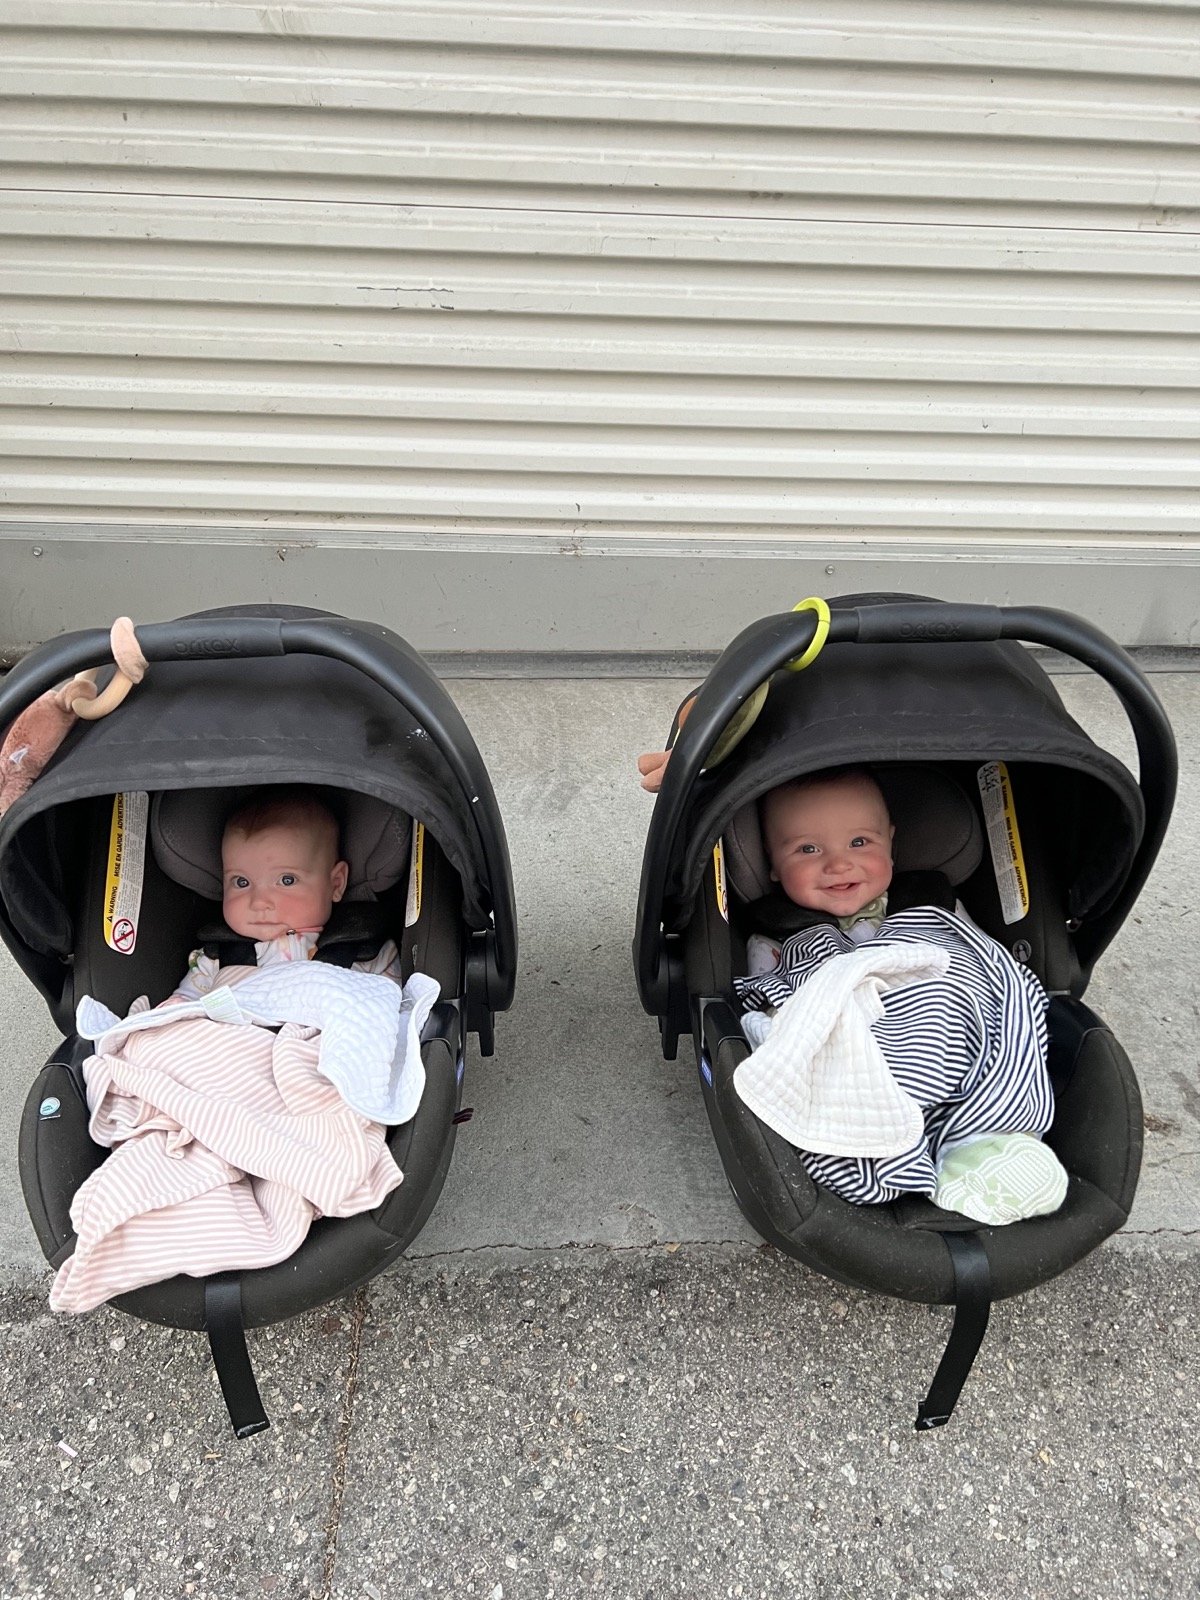 choosing infant car seats for my twins, lments of style, Britax B-Safe Gen2 Flexfit Infant Car Seat in SafeWash review, car seats without flame retardants, nuna, uppa, clek